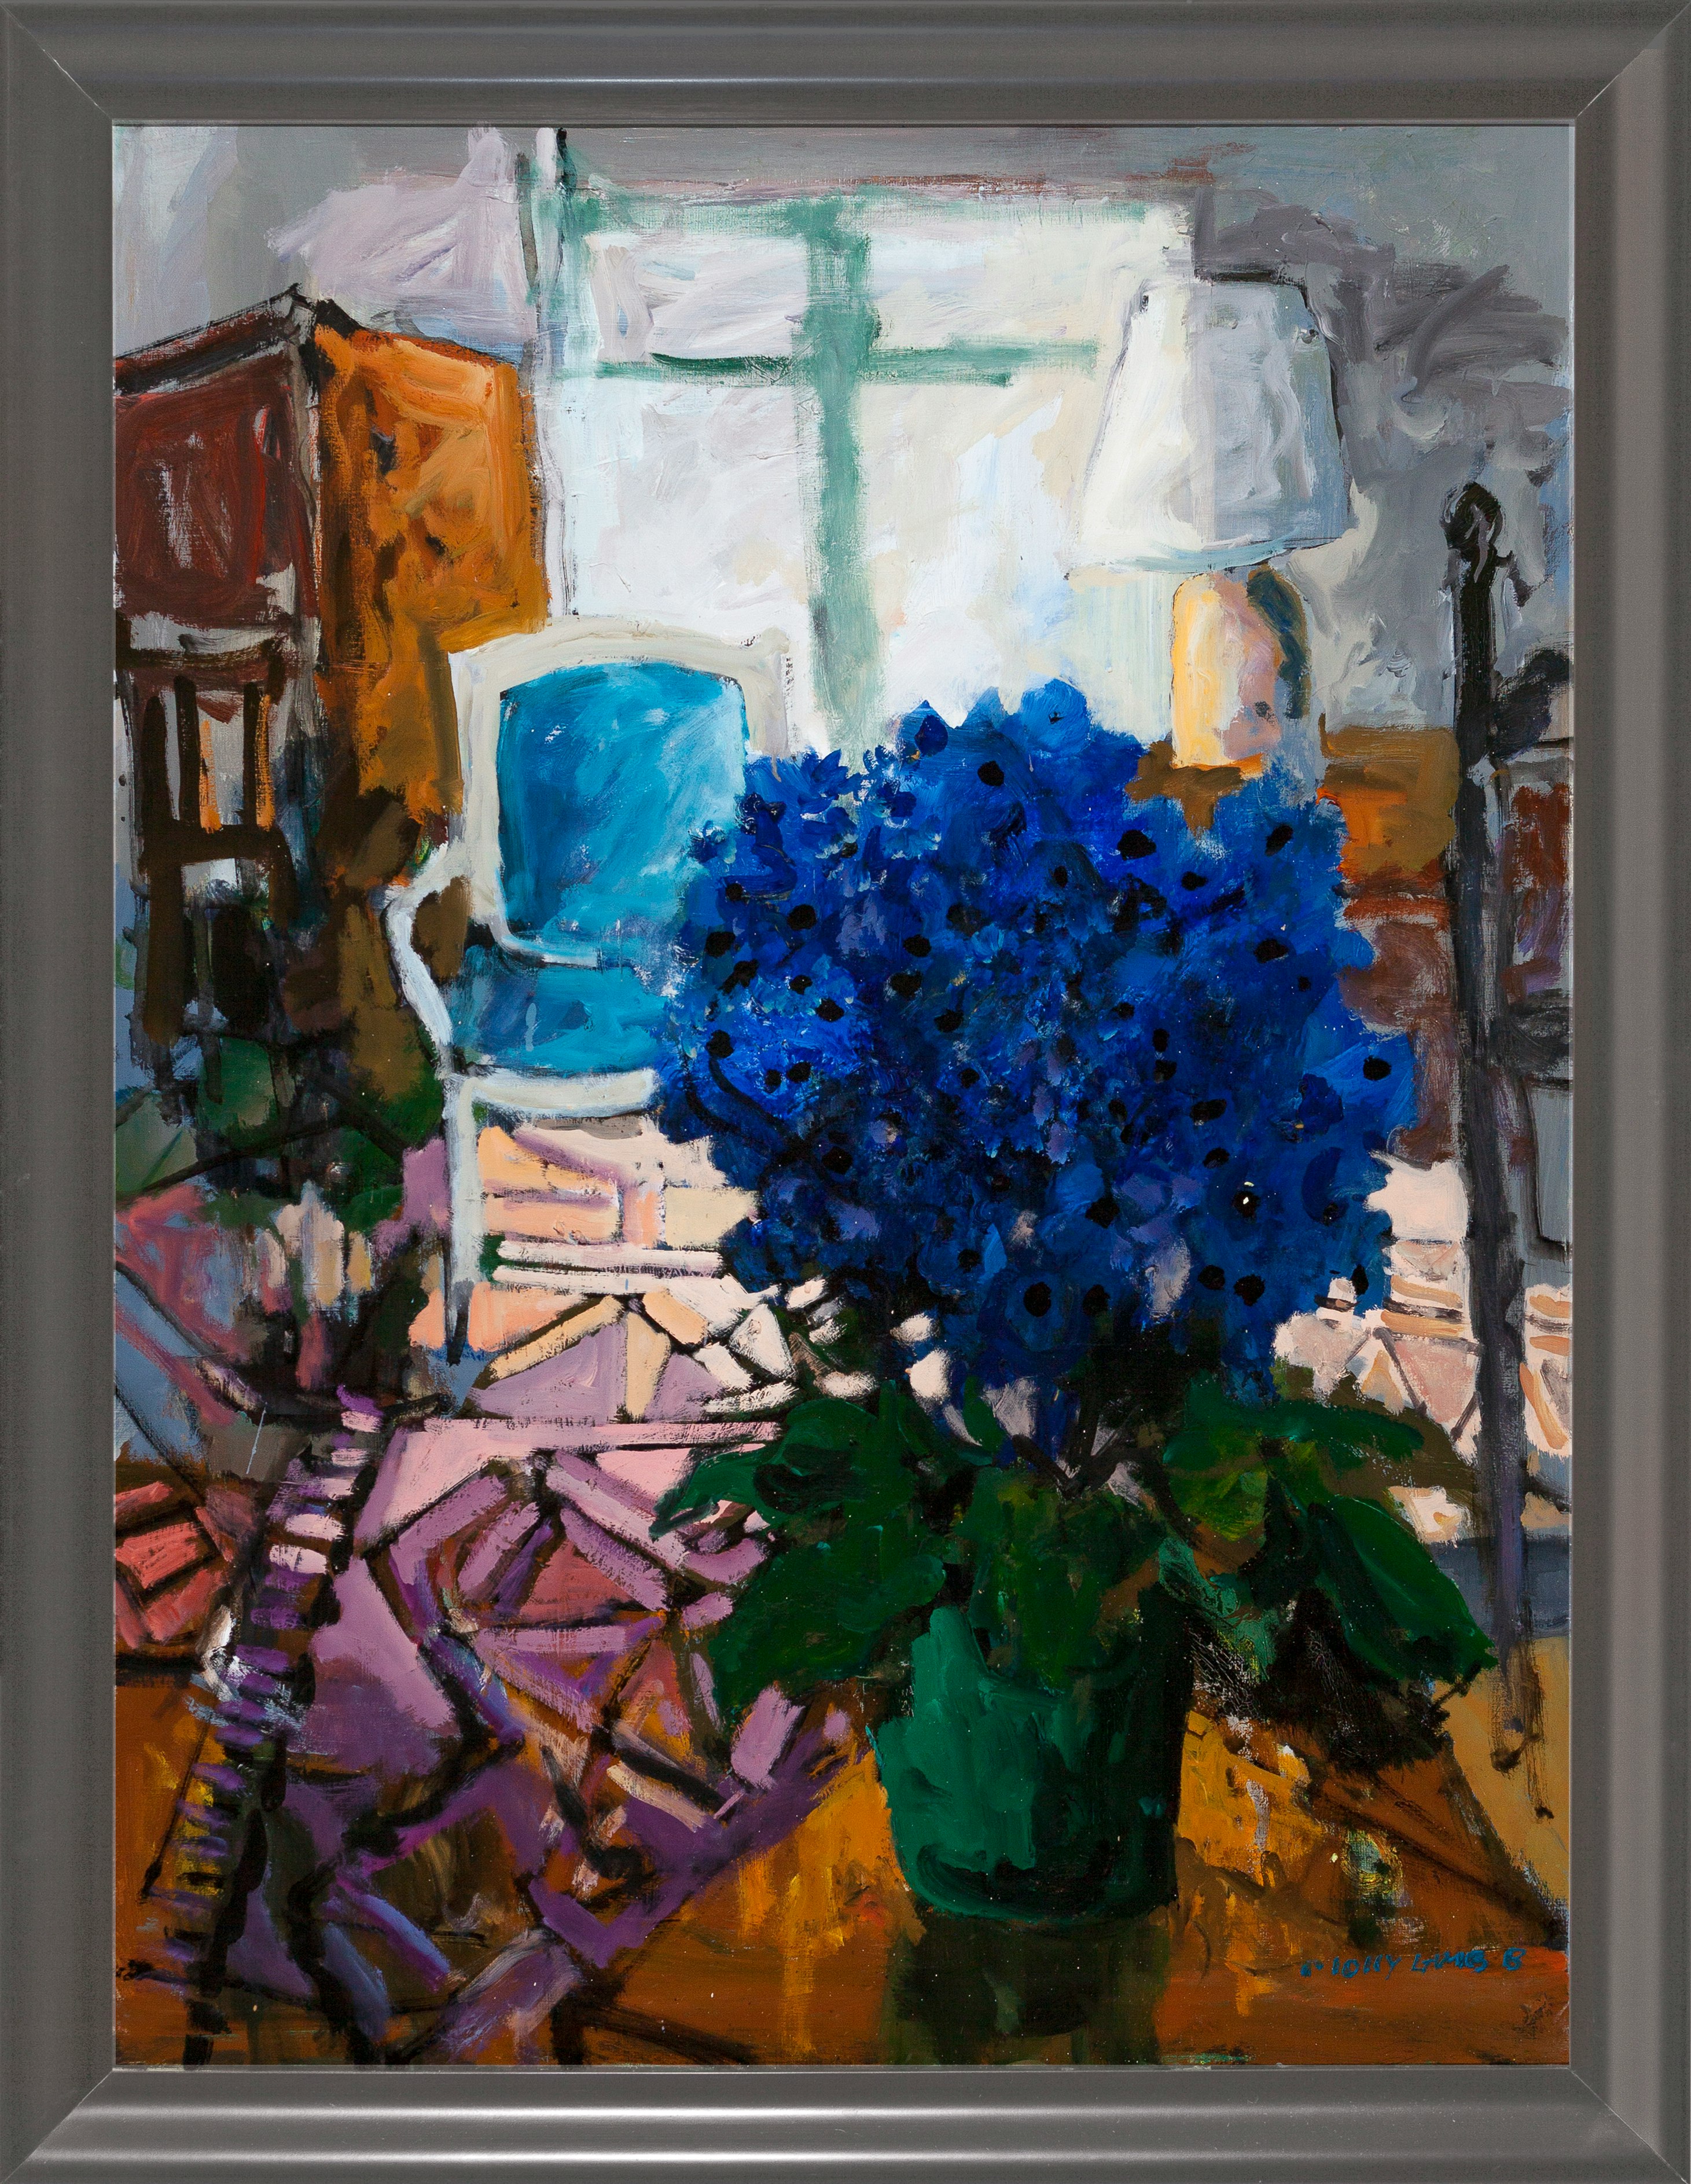 Interior & Blue Cineraria by Molly Lamb Bobak Oil on canvas - (40x30 in)